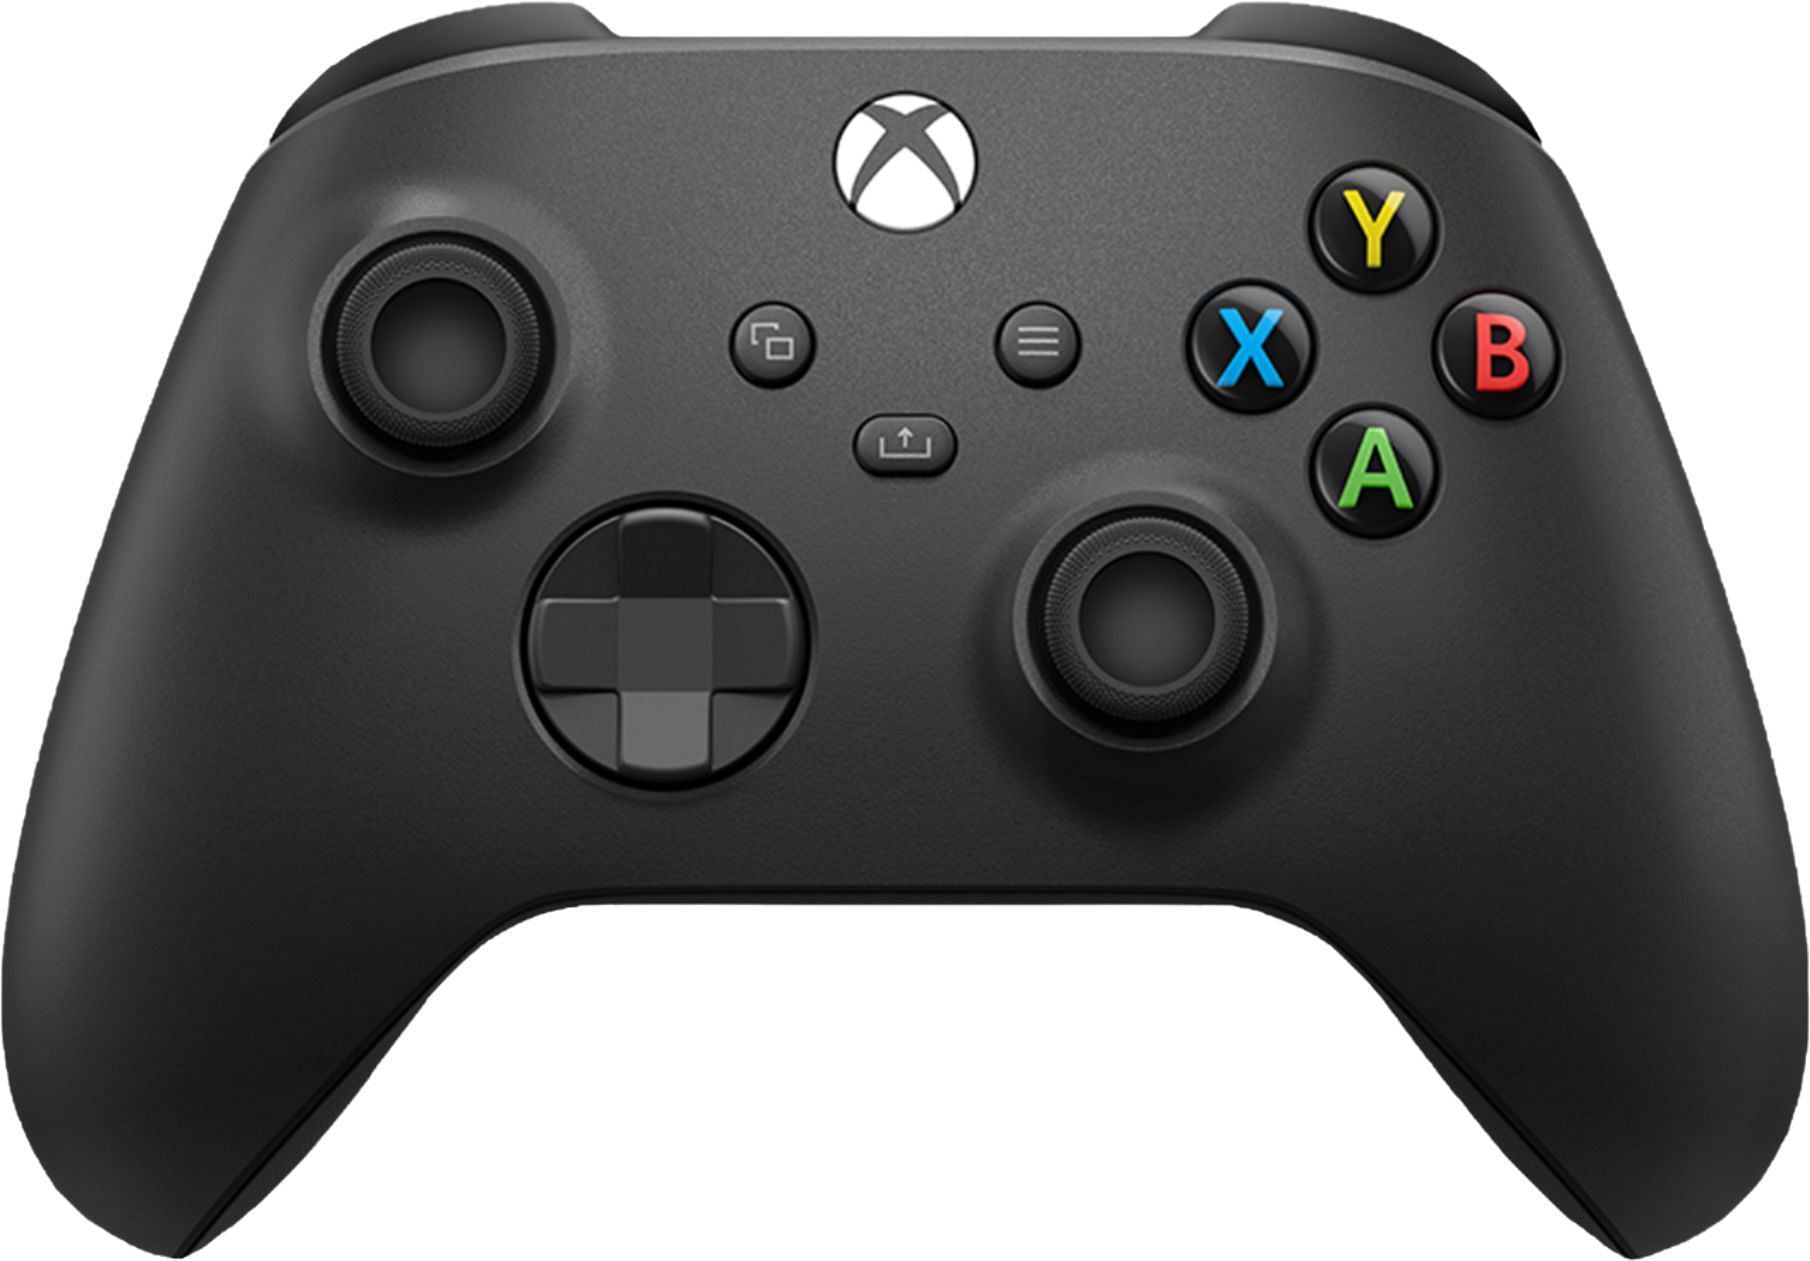 The Microsoft Xbox Wireless Controller (Image via Best Buy)